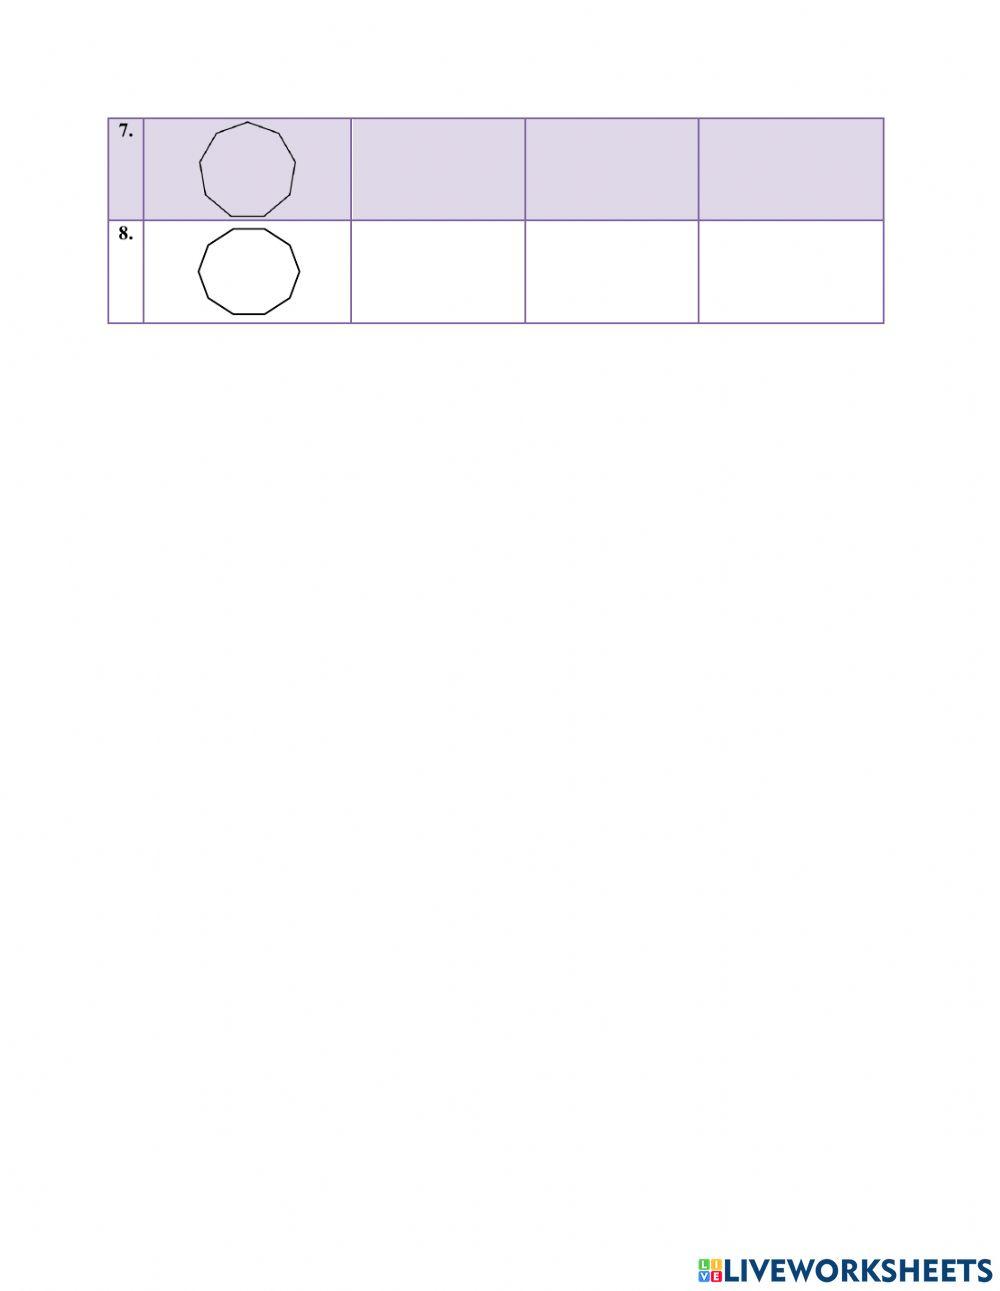 9.1.1  Menyatakan hubung kait antara bilangan sisi, bucu dan pepenjuru poligon